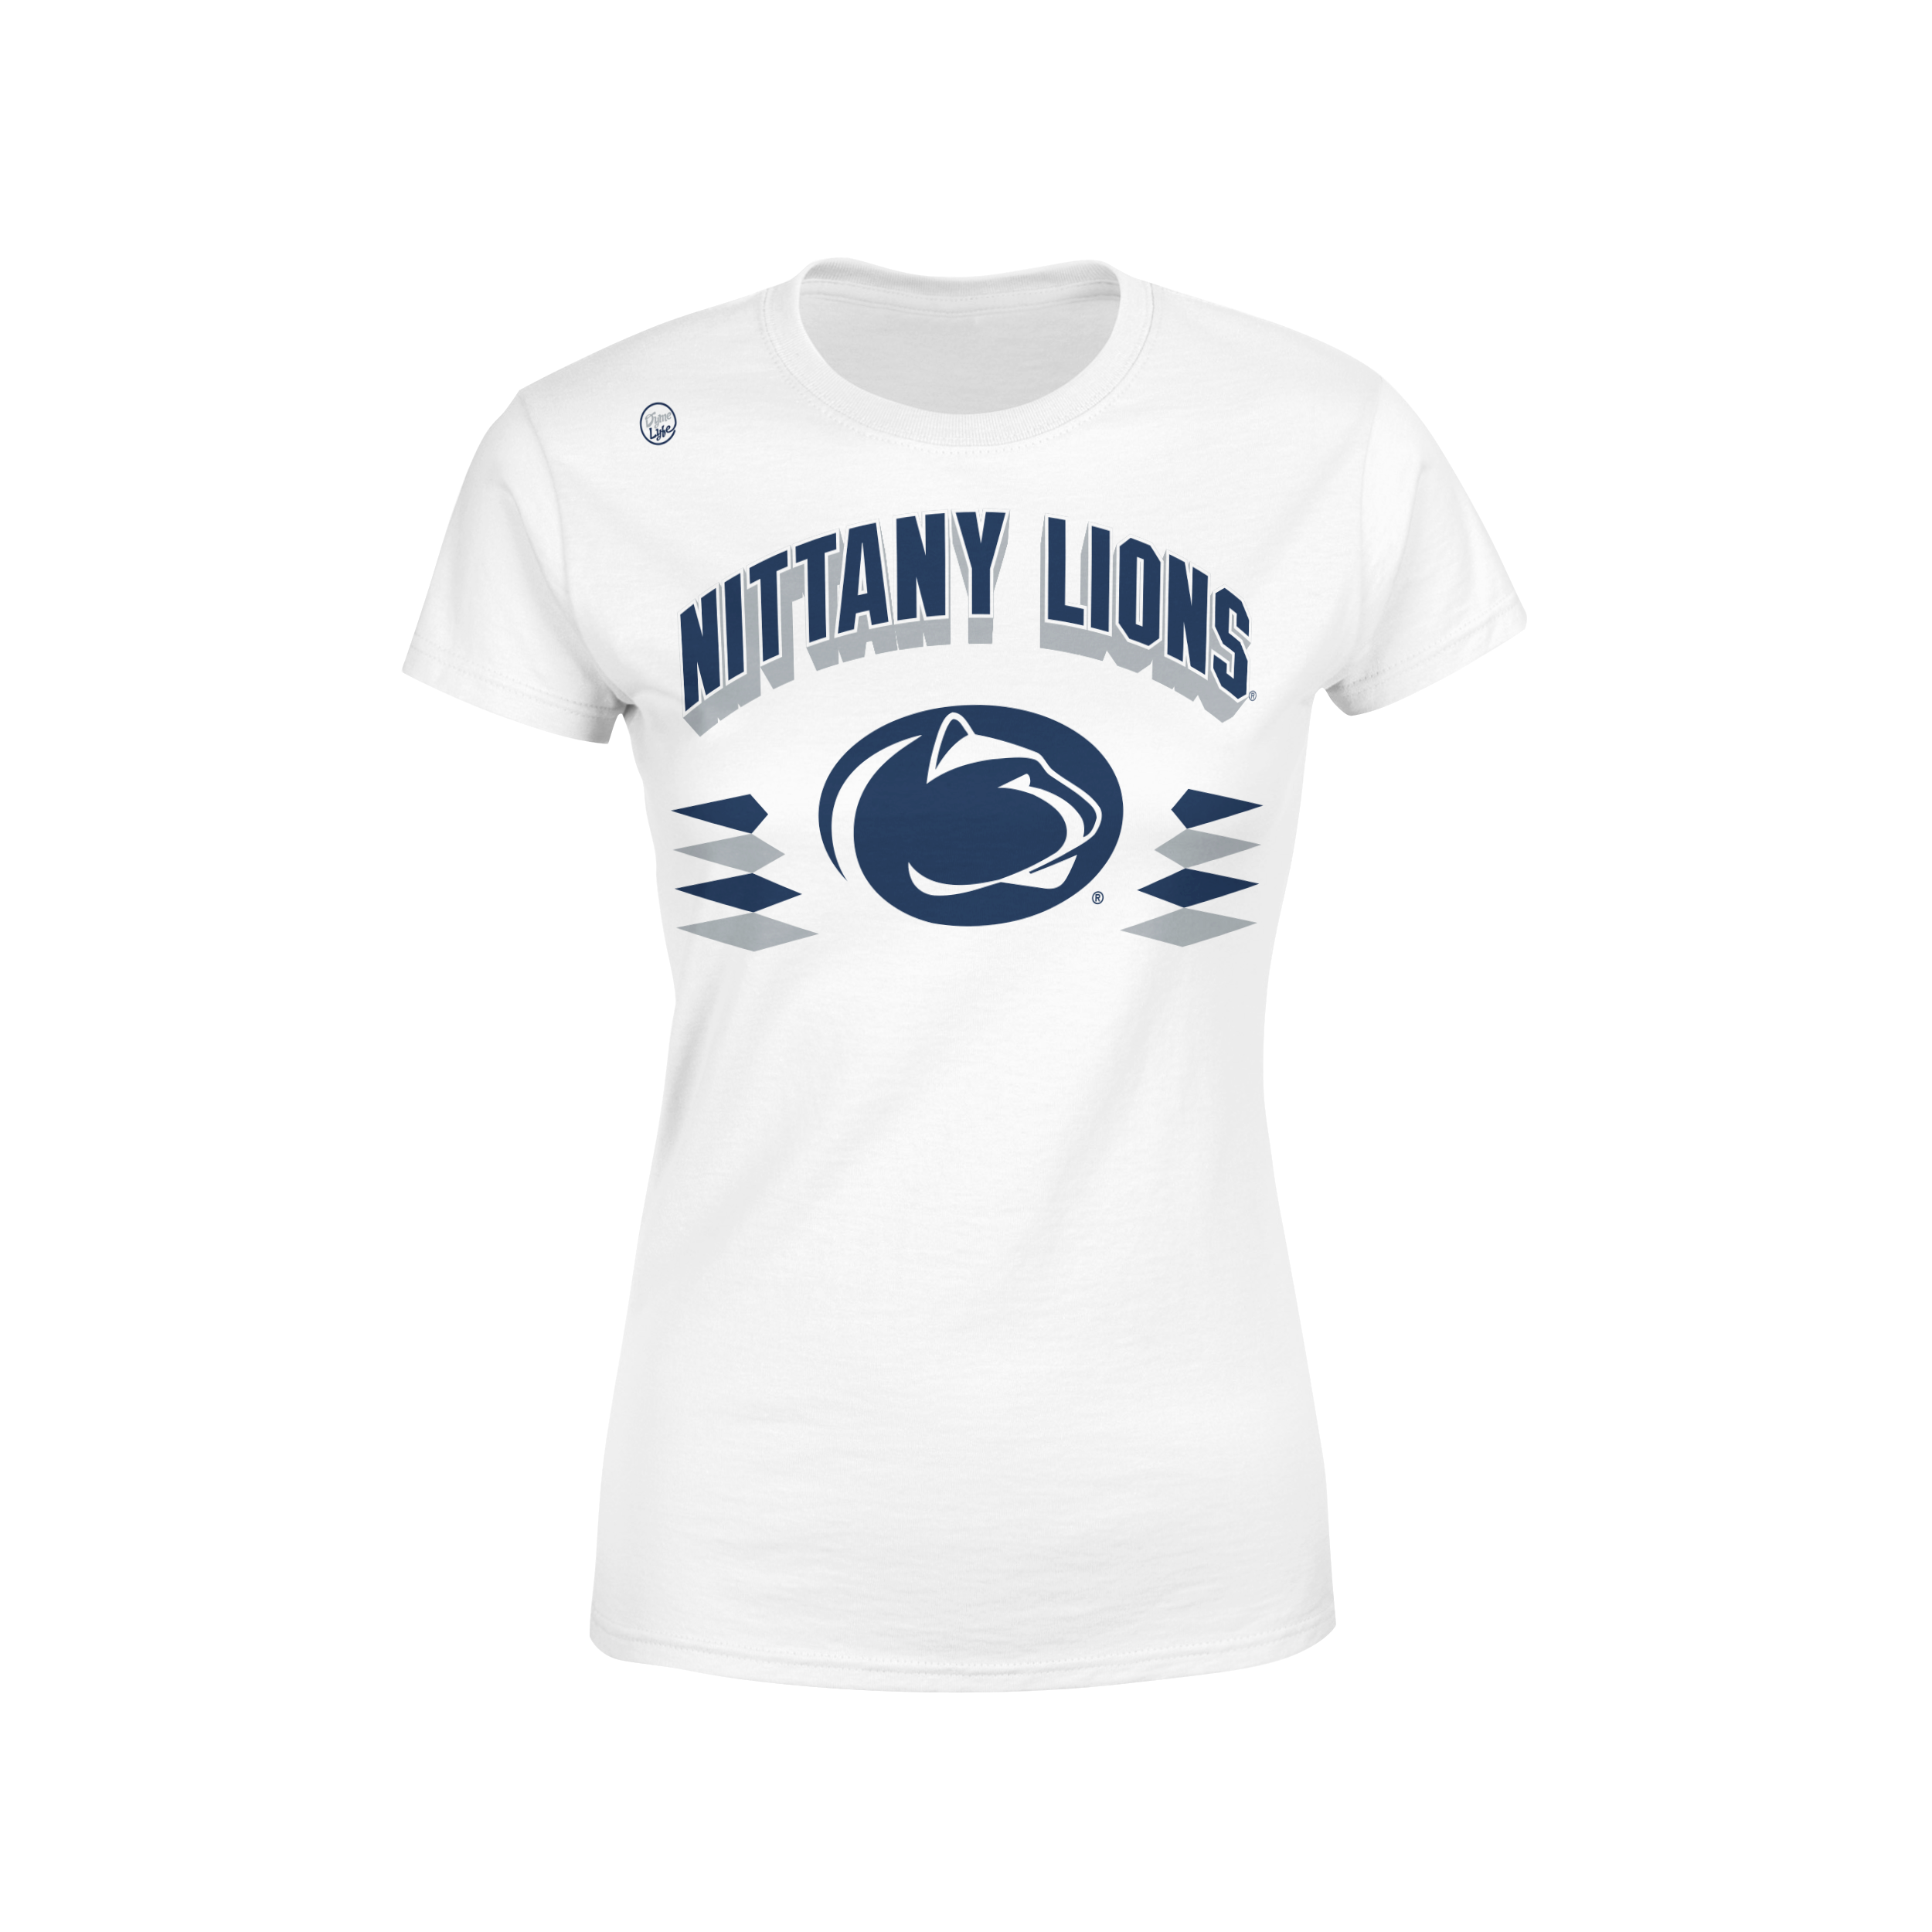 Penn State Nittany Lions Women’s Retro Tee